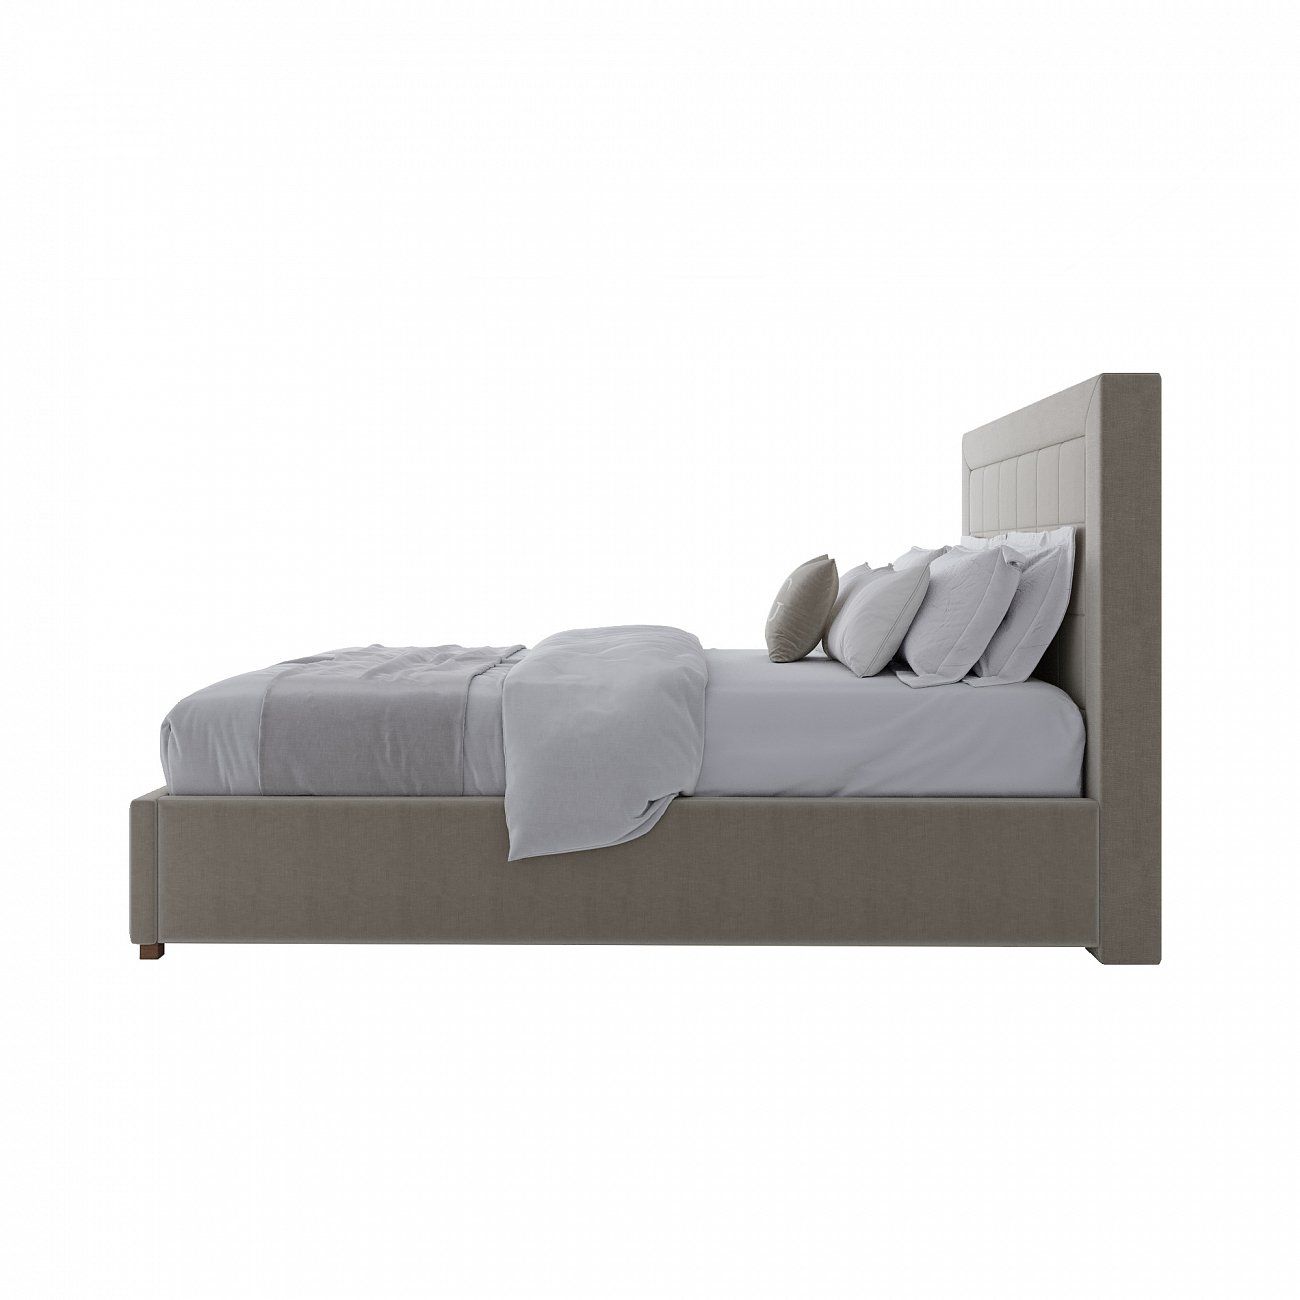 Teenage bed made of velour 140x200 brown-gray Elizabeth